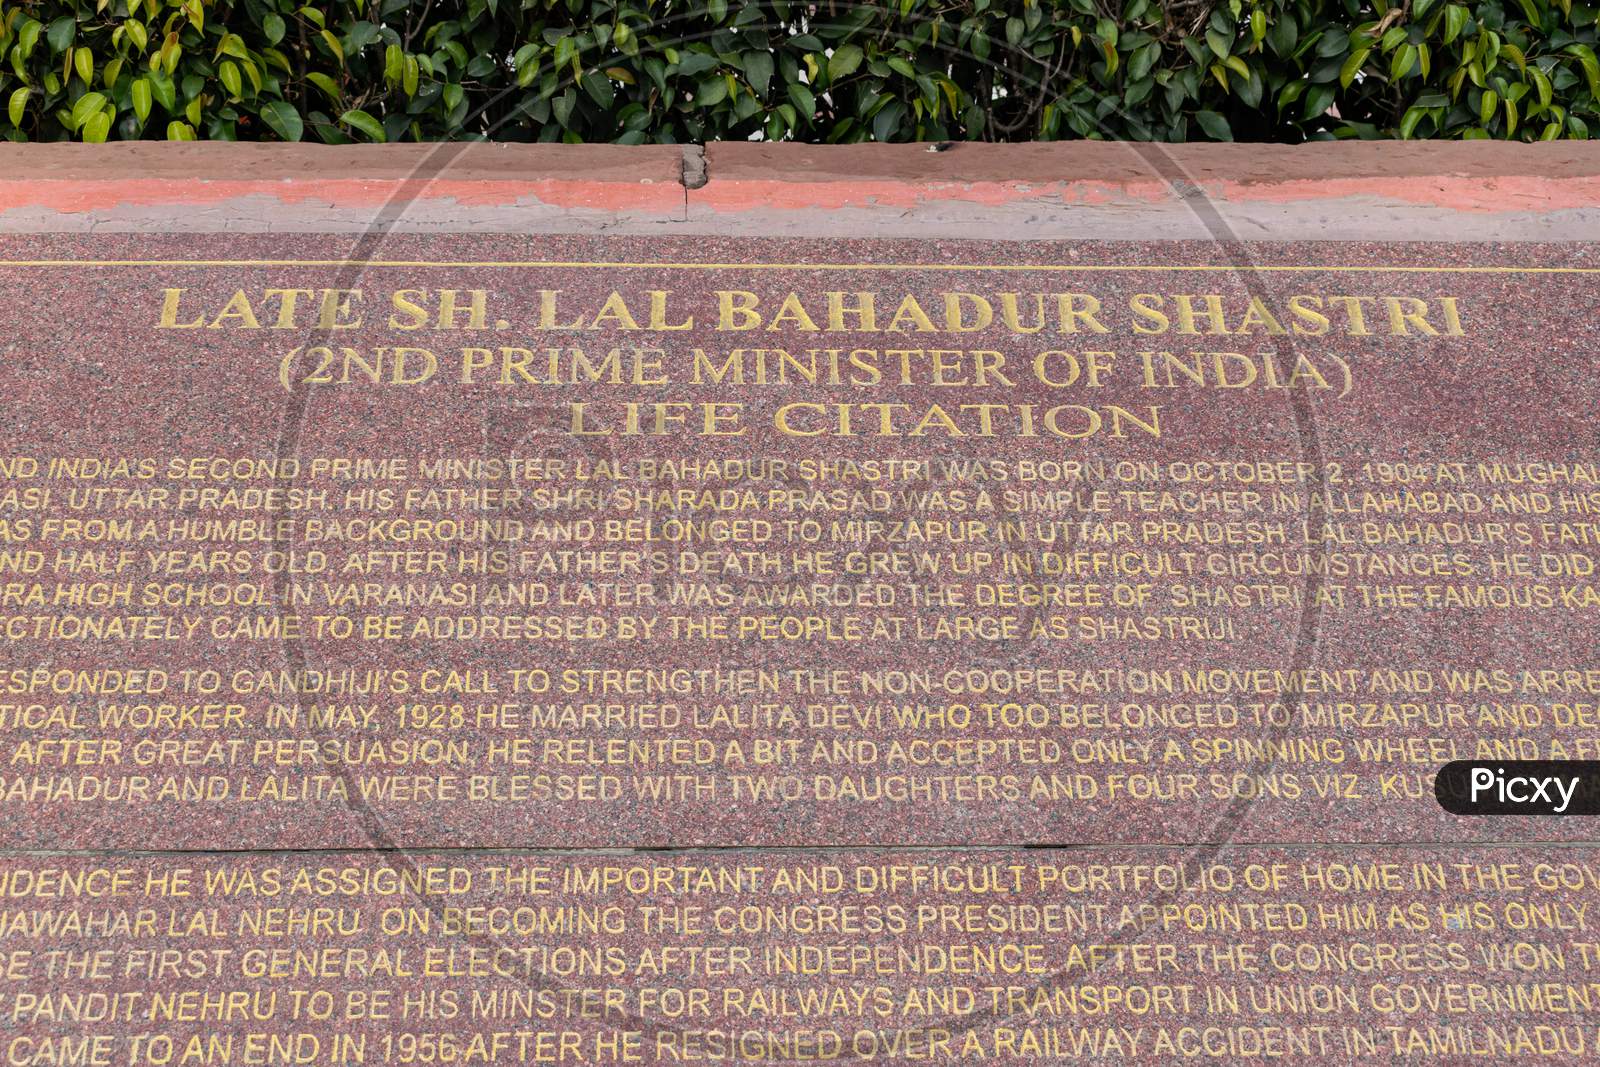 Vijay Ghat, Life Citation and Samadhi of 2nd Prime Minister of India Sh. Lal Bahadur Shastri